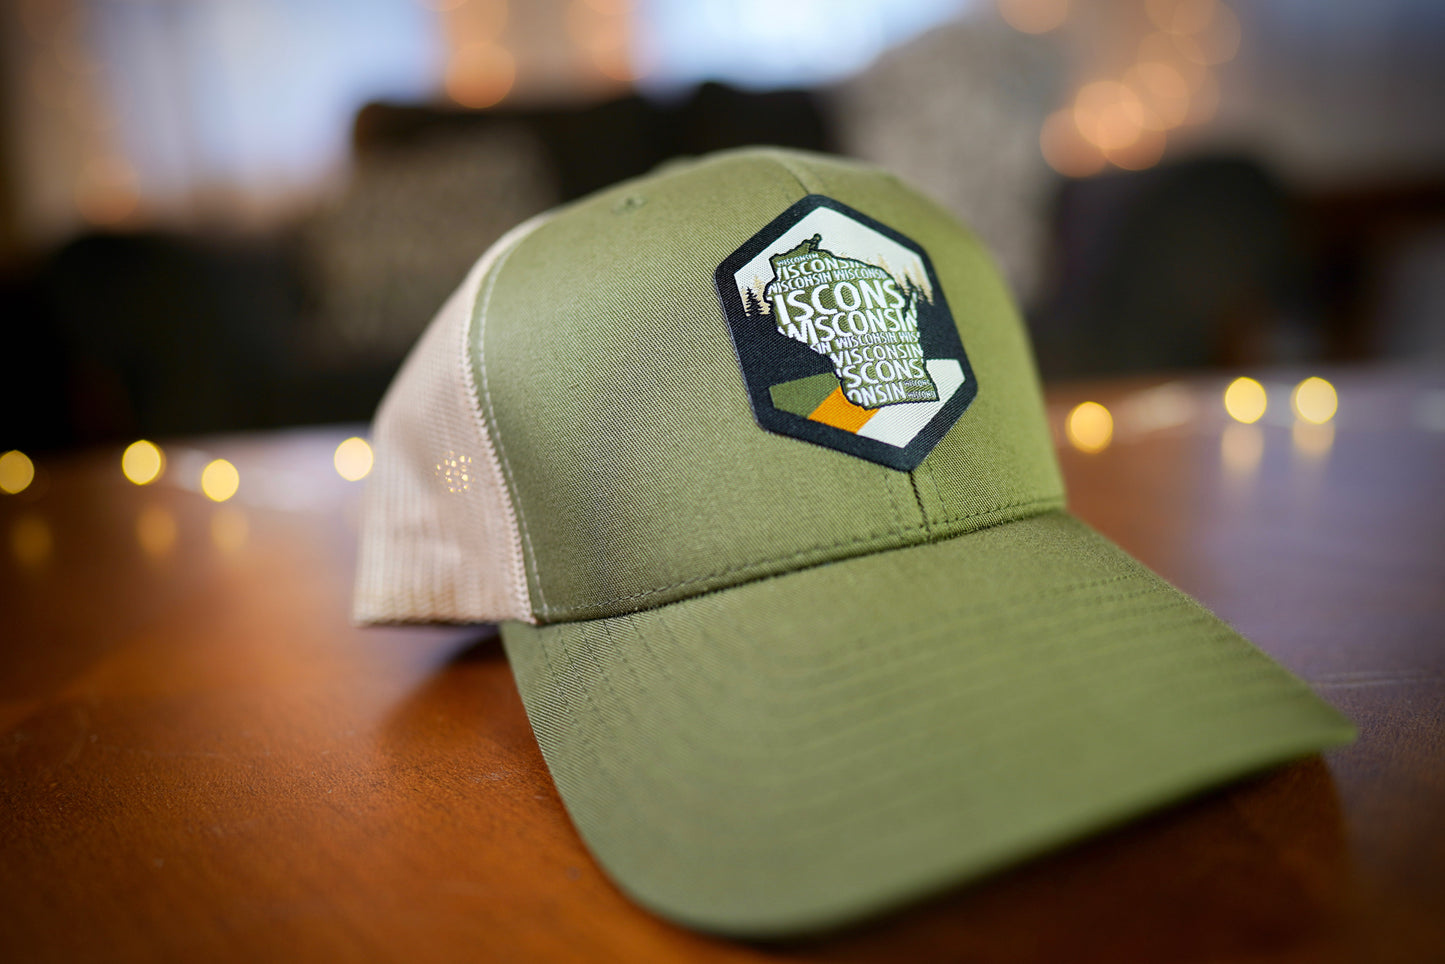 "Vintage Wisconsin" Design Trucker Hat (Khaki Mesh/ Moss Green Fabric)